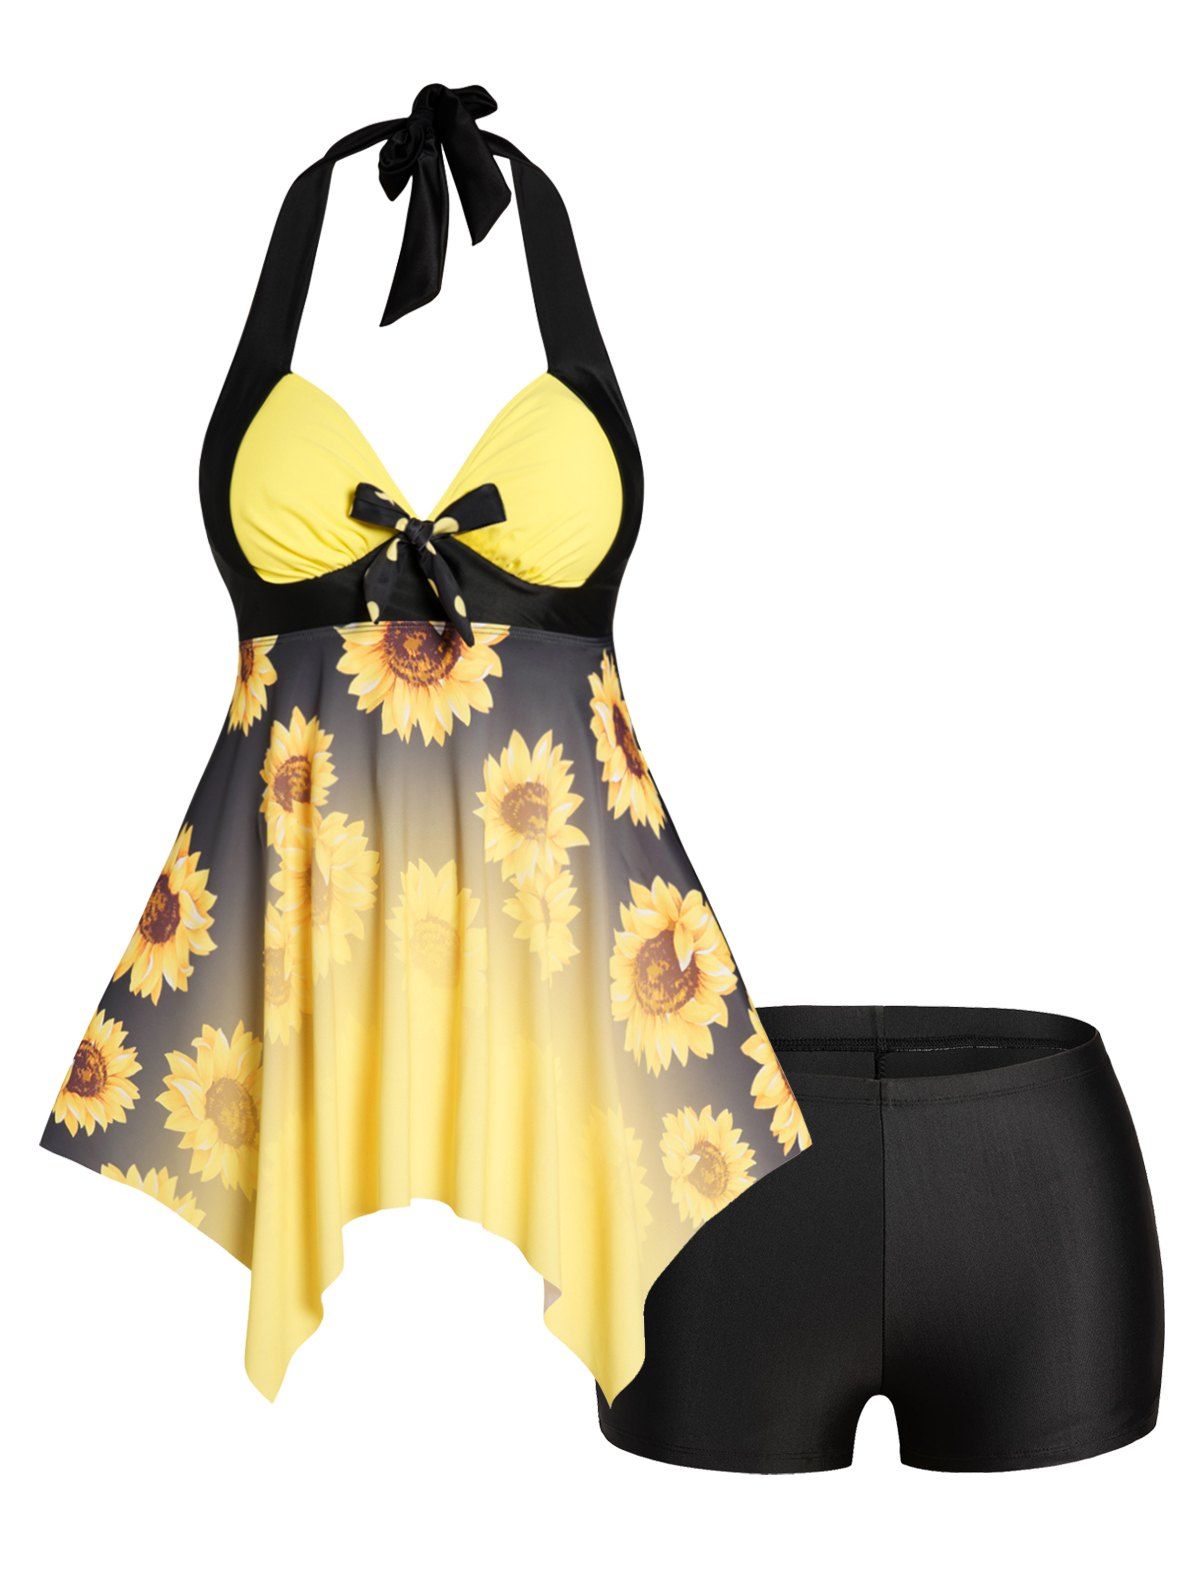 Plus Size Tankini Swimsuit Sunflower Print Halter Vacation Modest Swimsuit Padded Boyleg Bathing Suit - YELLOW 5X